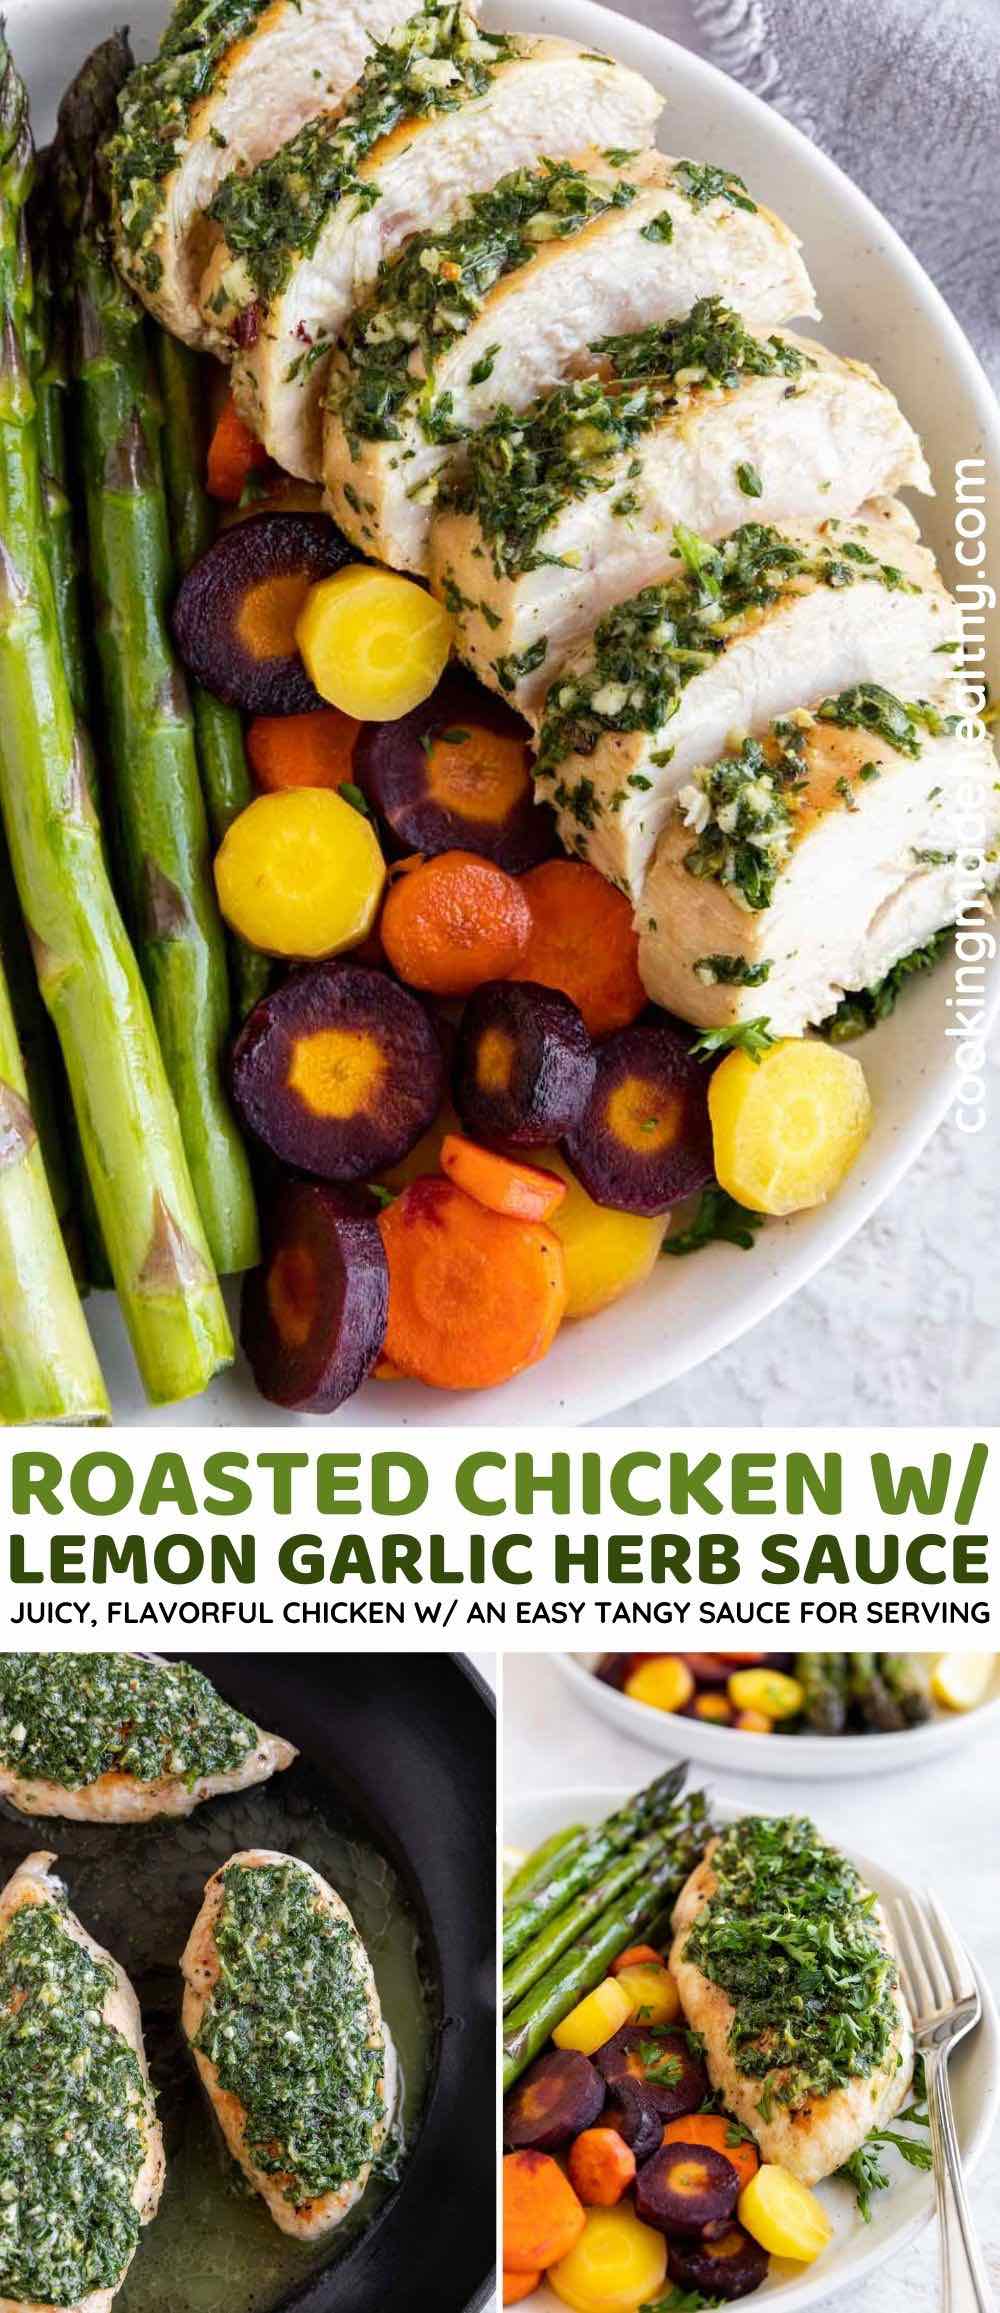 Roasted Chicken with Lemon Garlic Herb Sauce collage